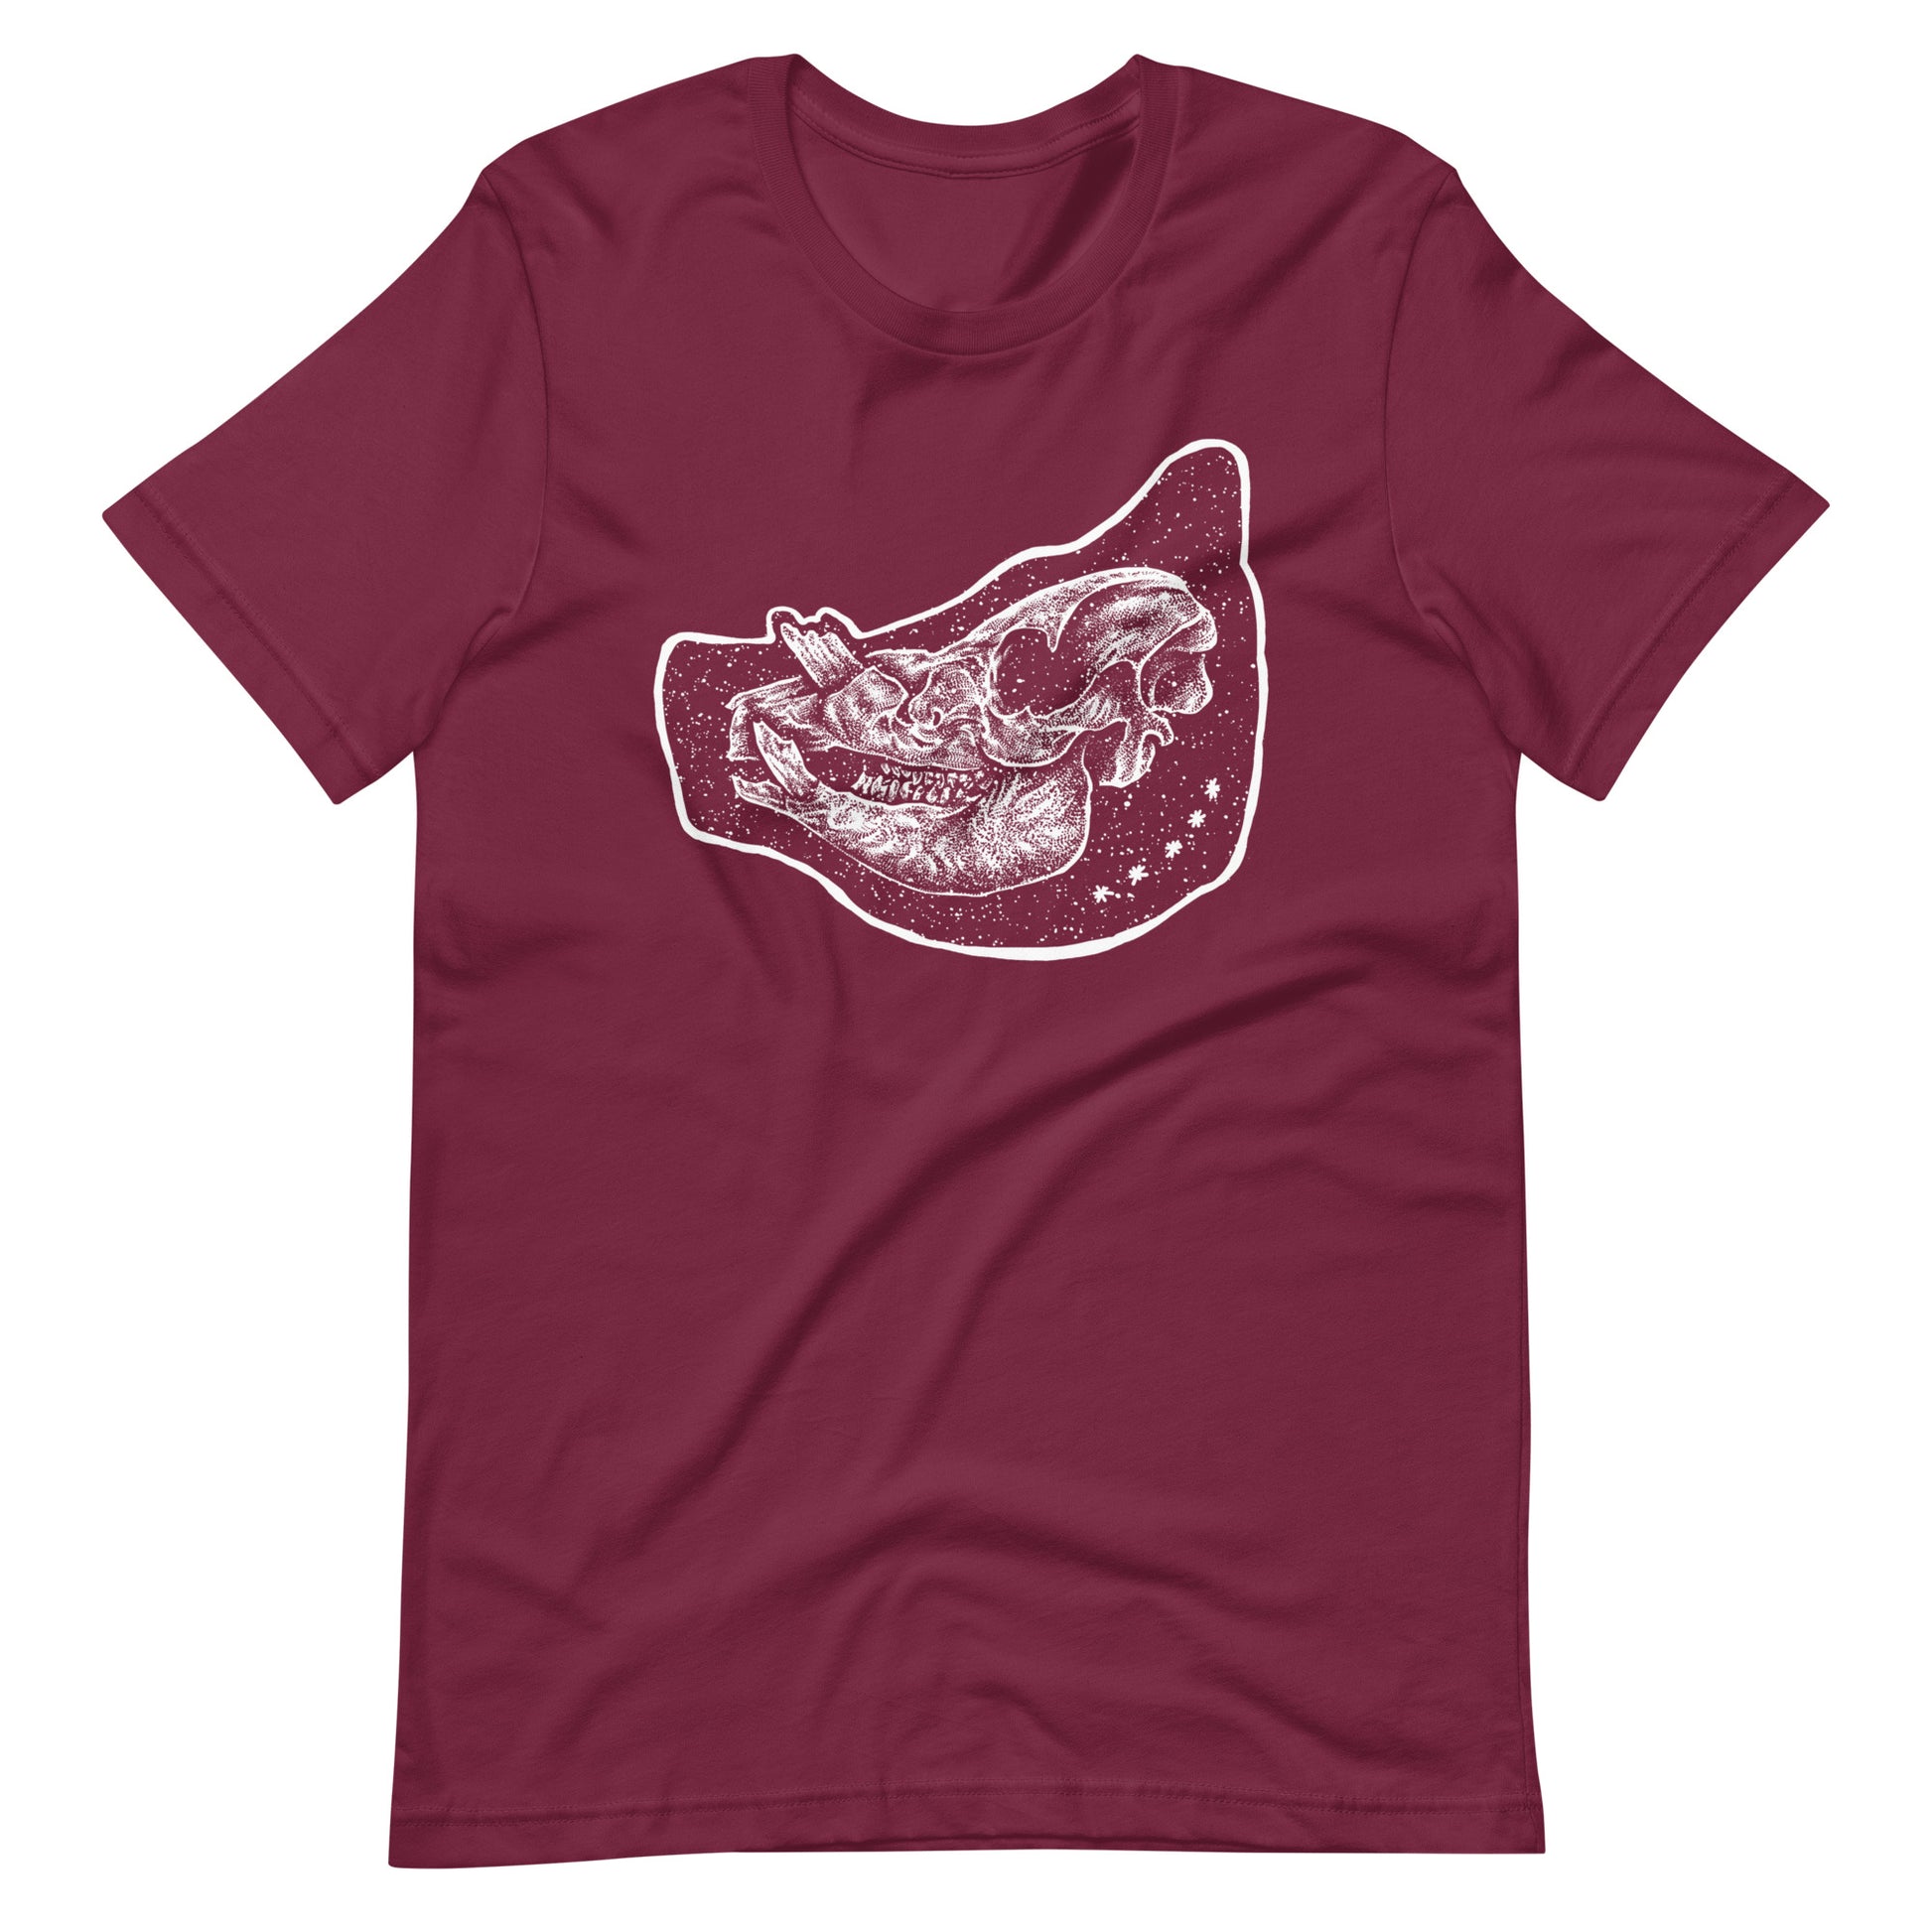 Pig White - Men's t-shirt - Maroon Front